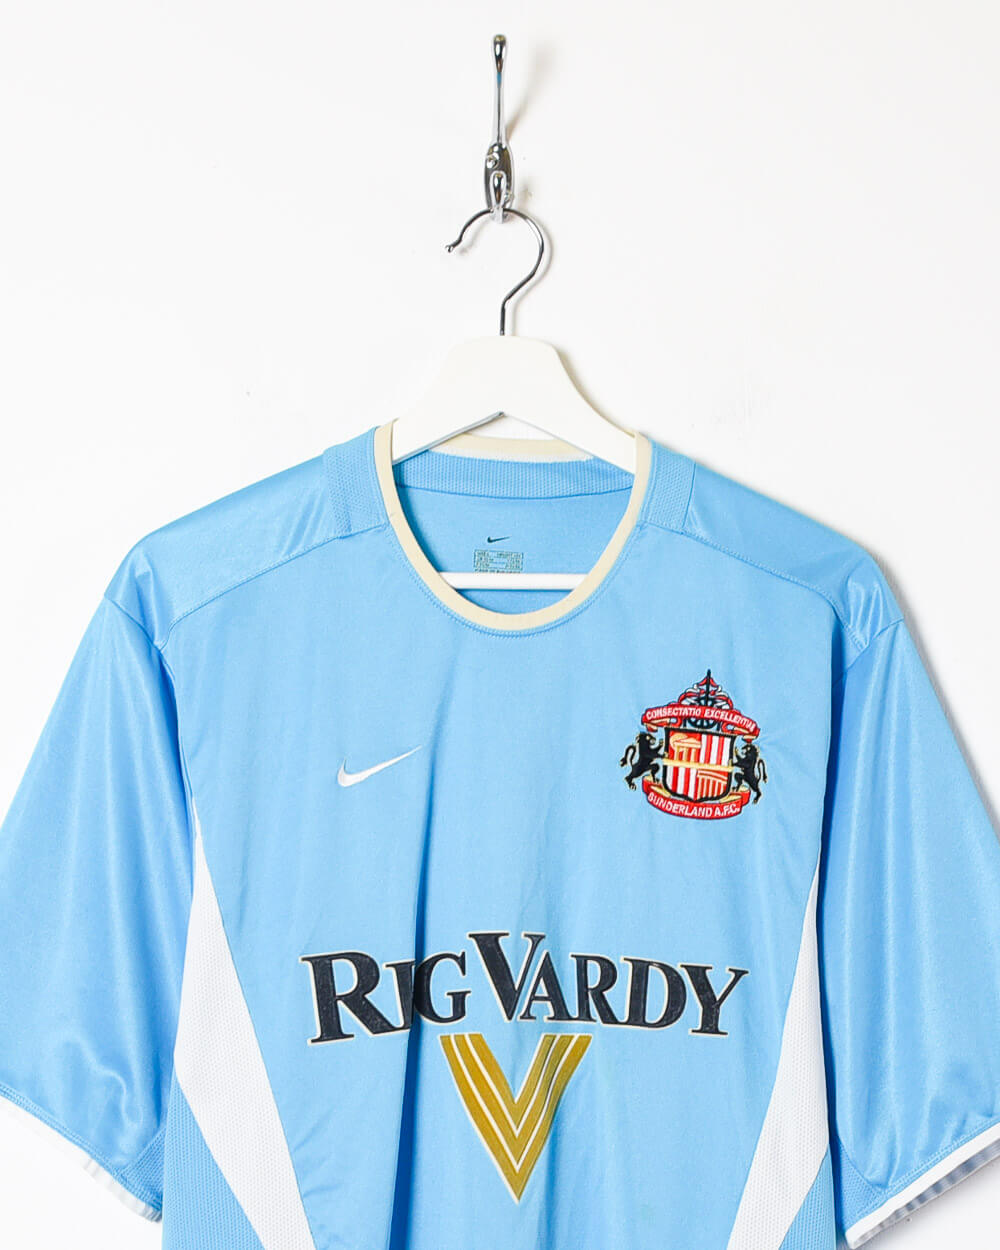 Baby Nike Sunderland 2002/03 Away Football Shirt - Large